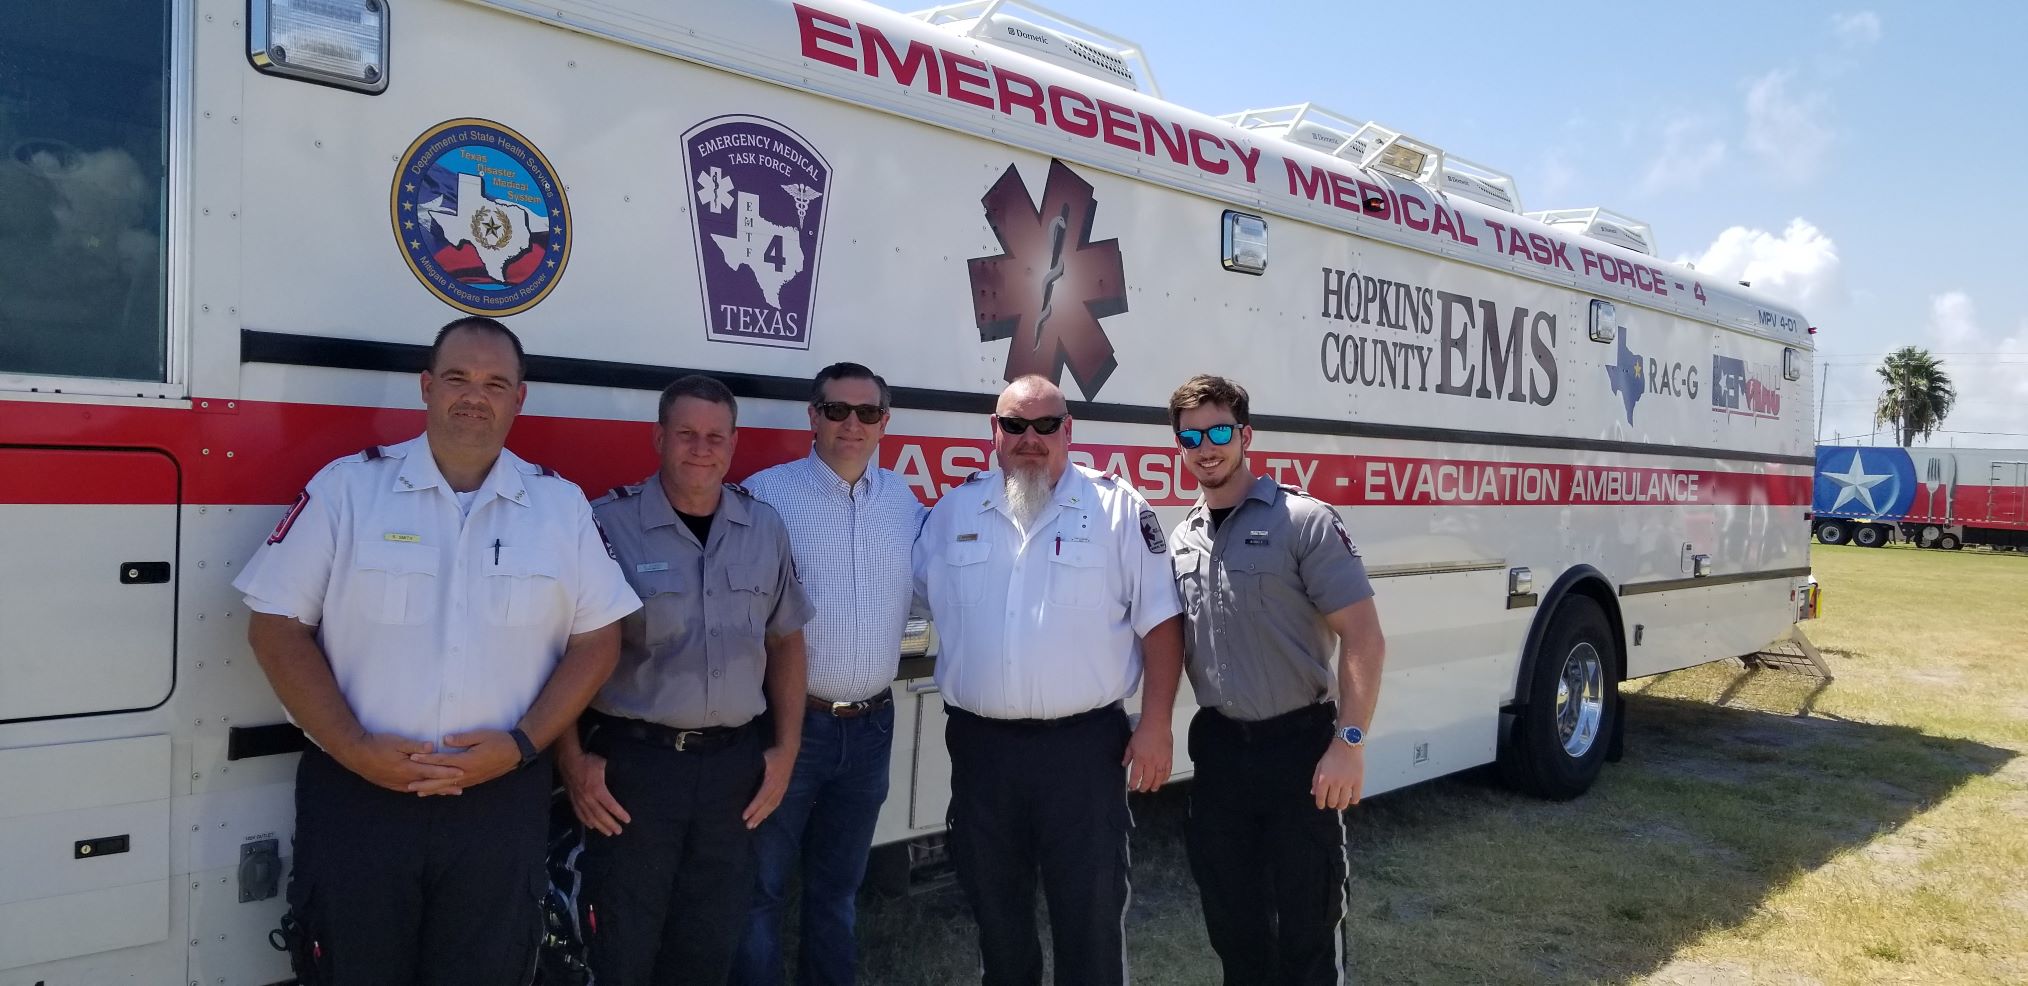 Hopkins County EMS AMBUS, MPV4-01, Attends City of Rockport TX Hurricane Harvey Anniversary Event